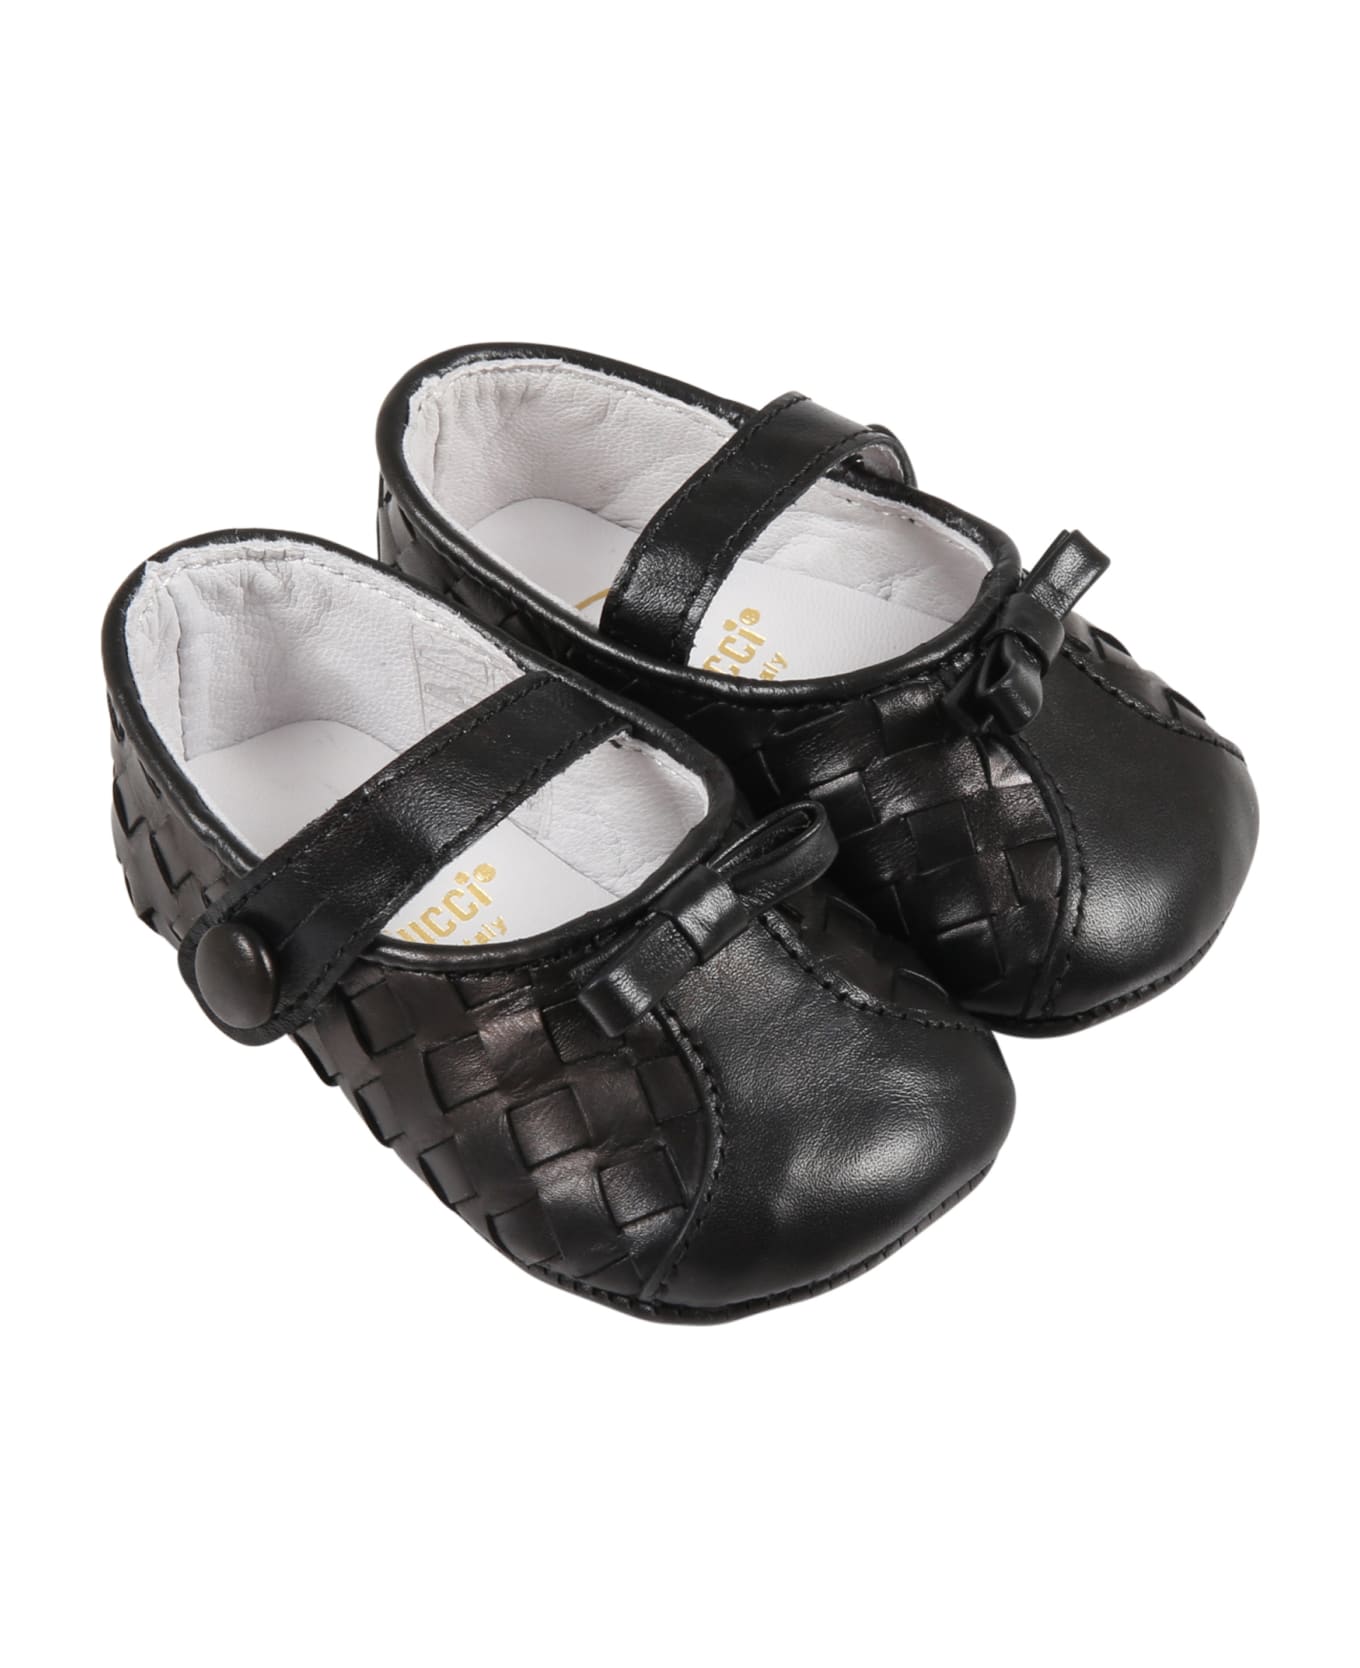 Gallucci Black Ballet Flats For Baby Girl - Black